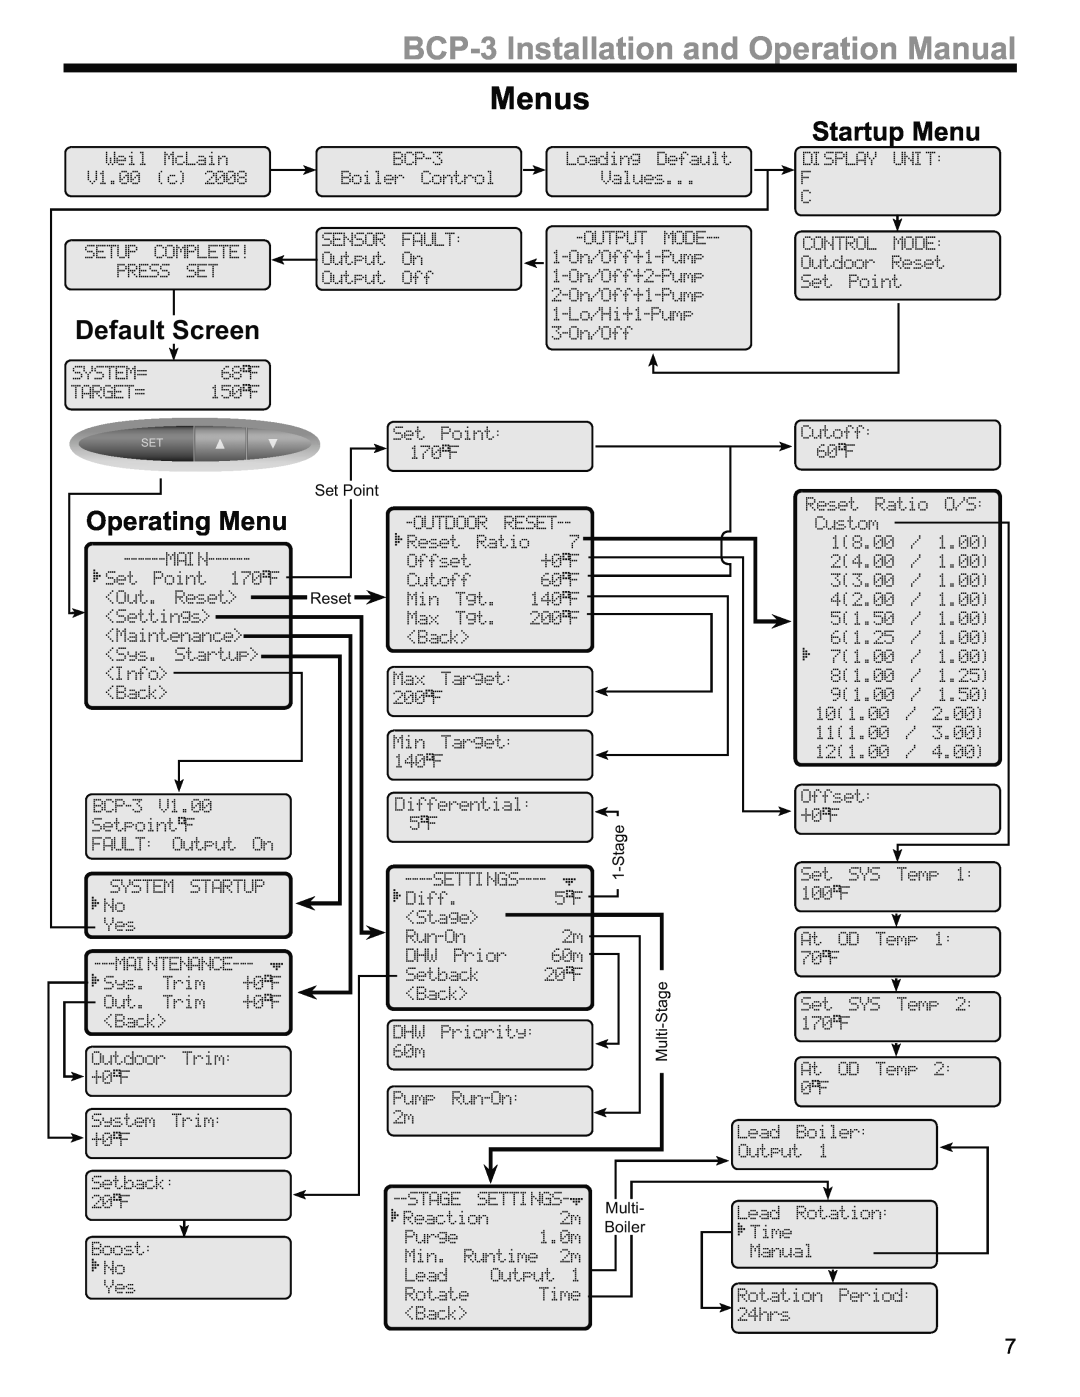 Weil-McLain BCP-3 manual Menus, Startup Menu, Default Screen, Operating Menu 